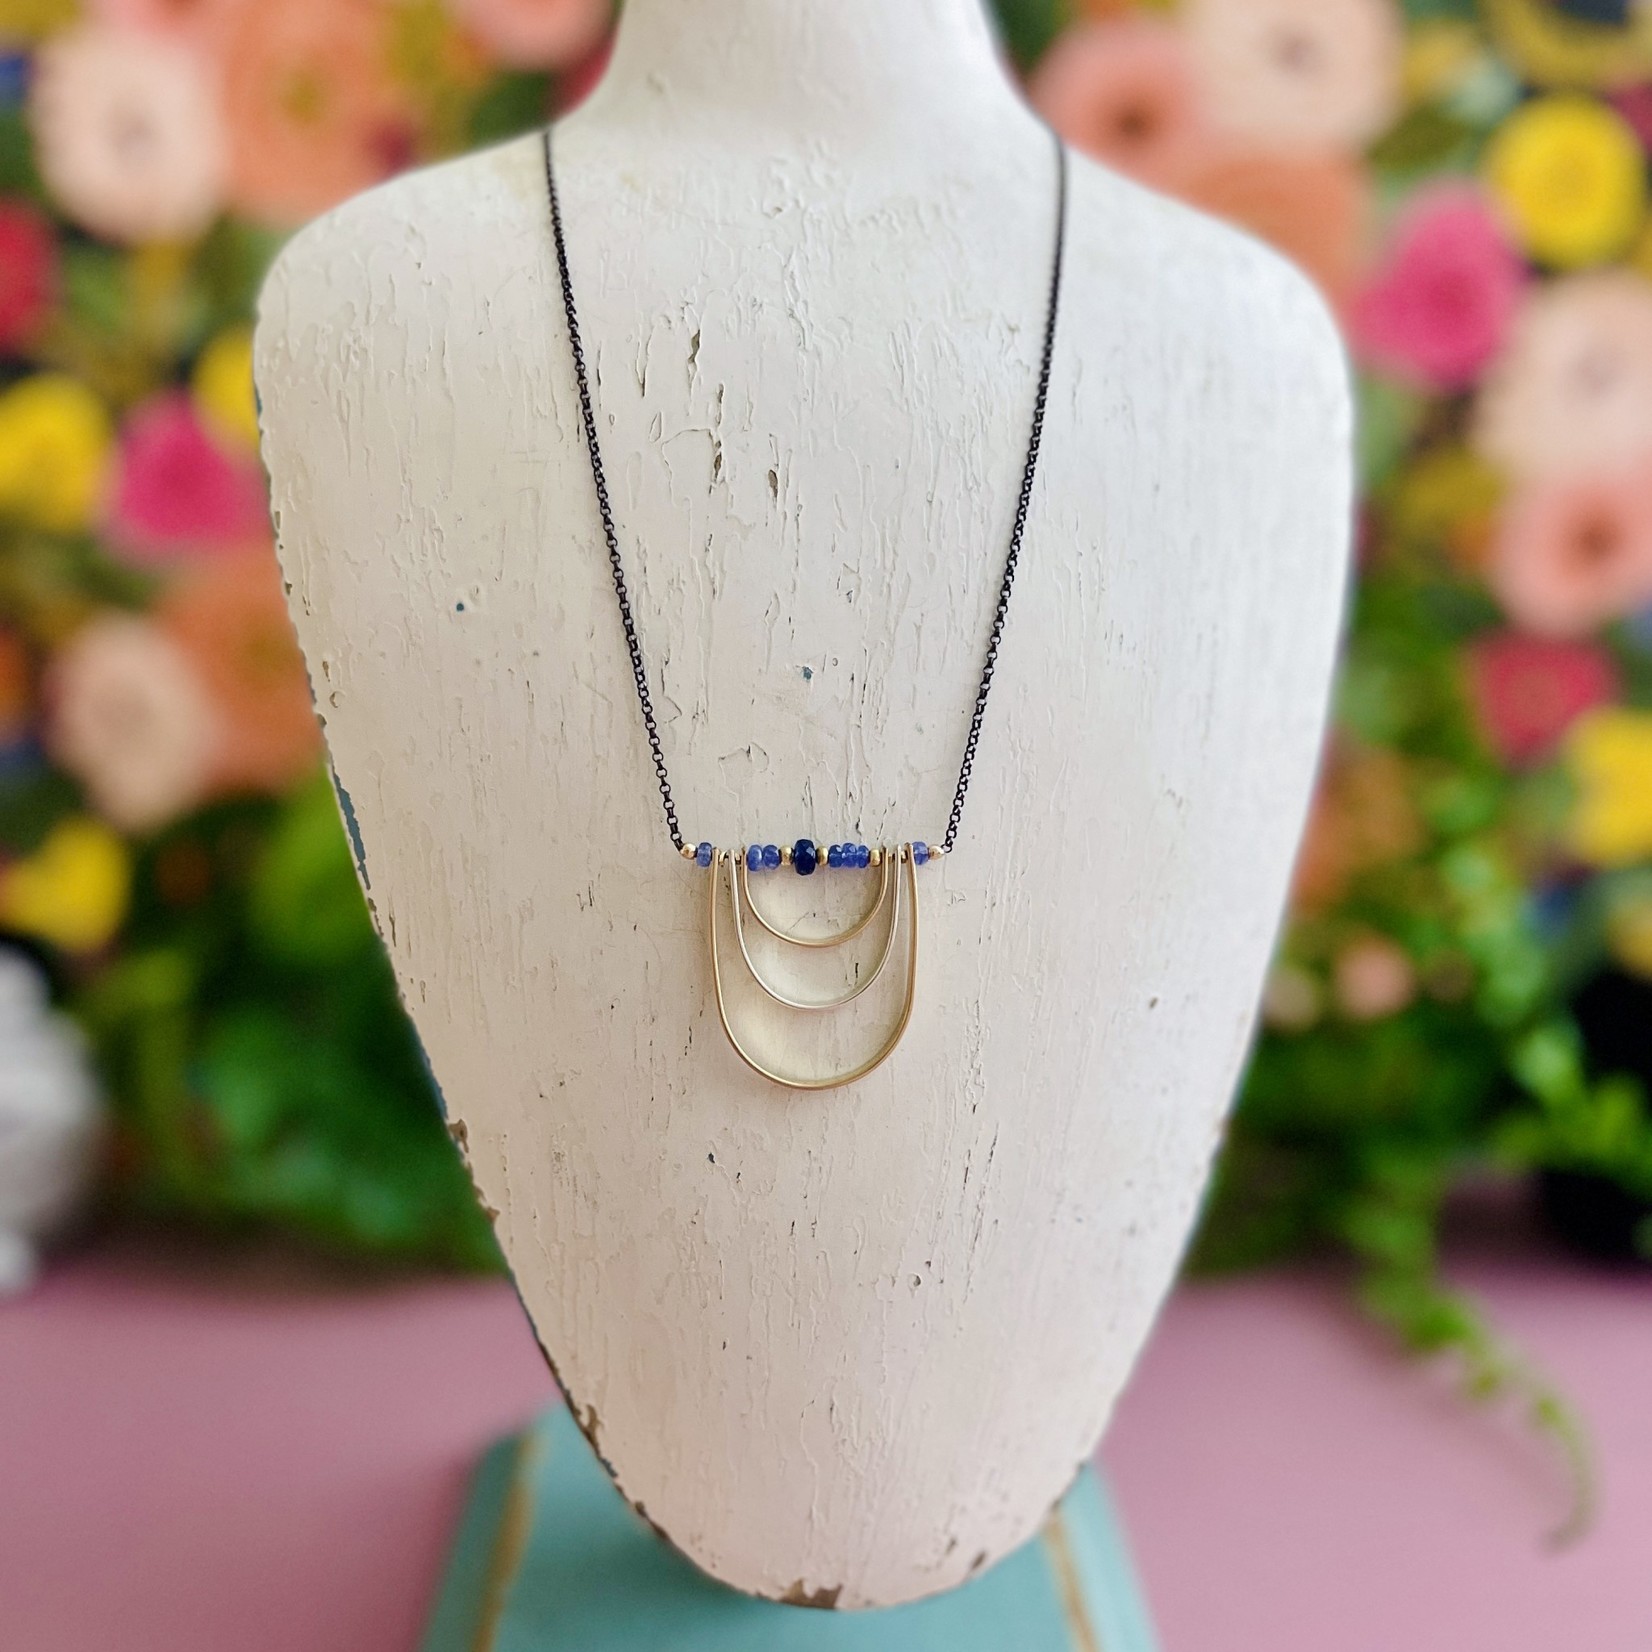 J&I Handmade Tanzanite, blue sapphire, 14kt gold filled + sterling curve necklace. 18"L